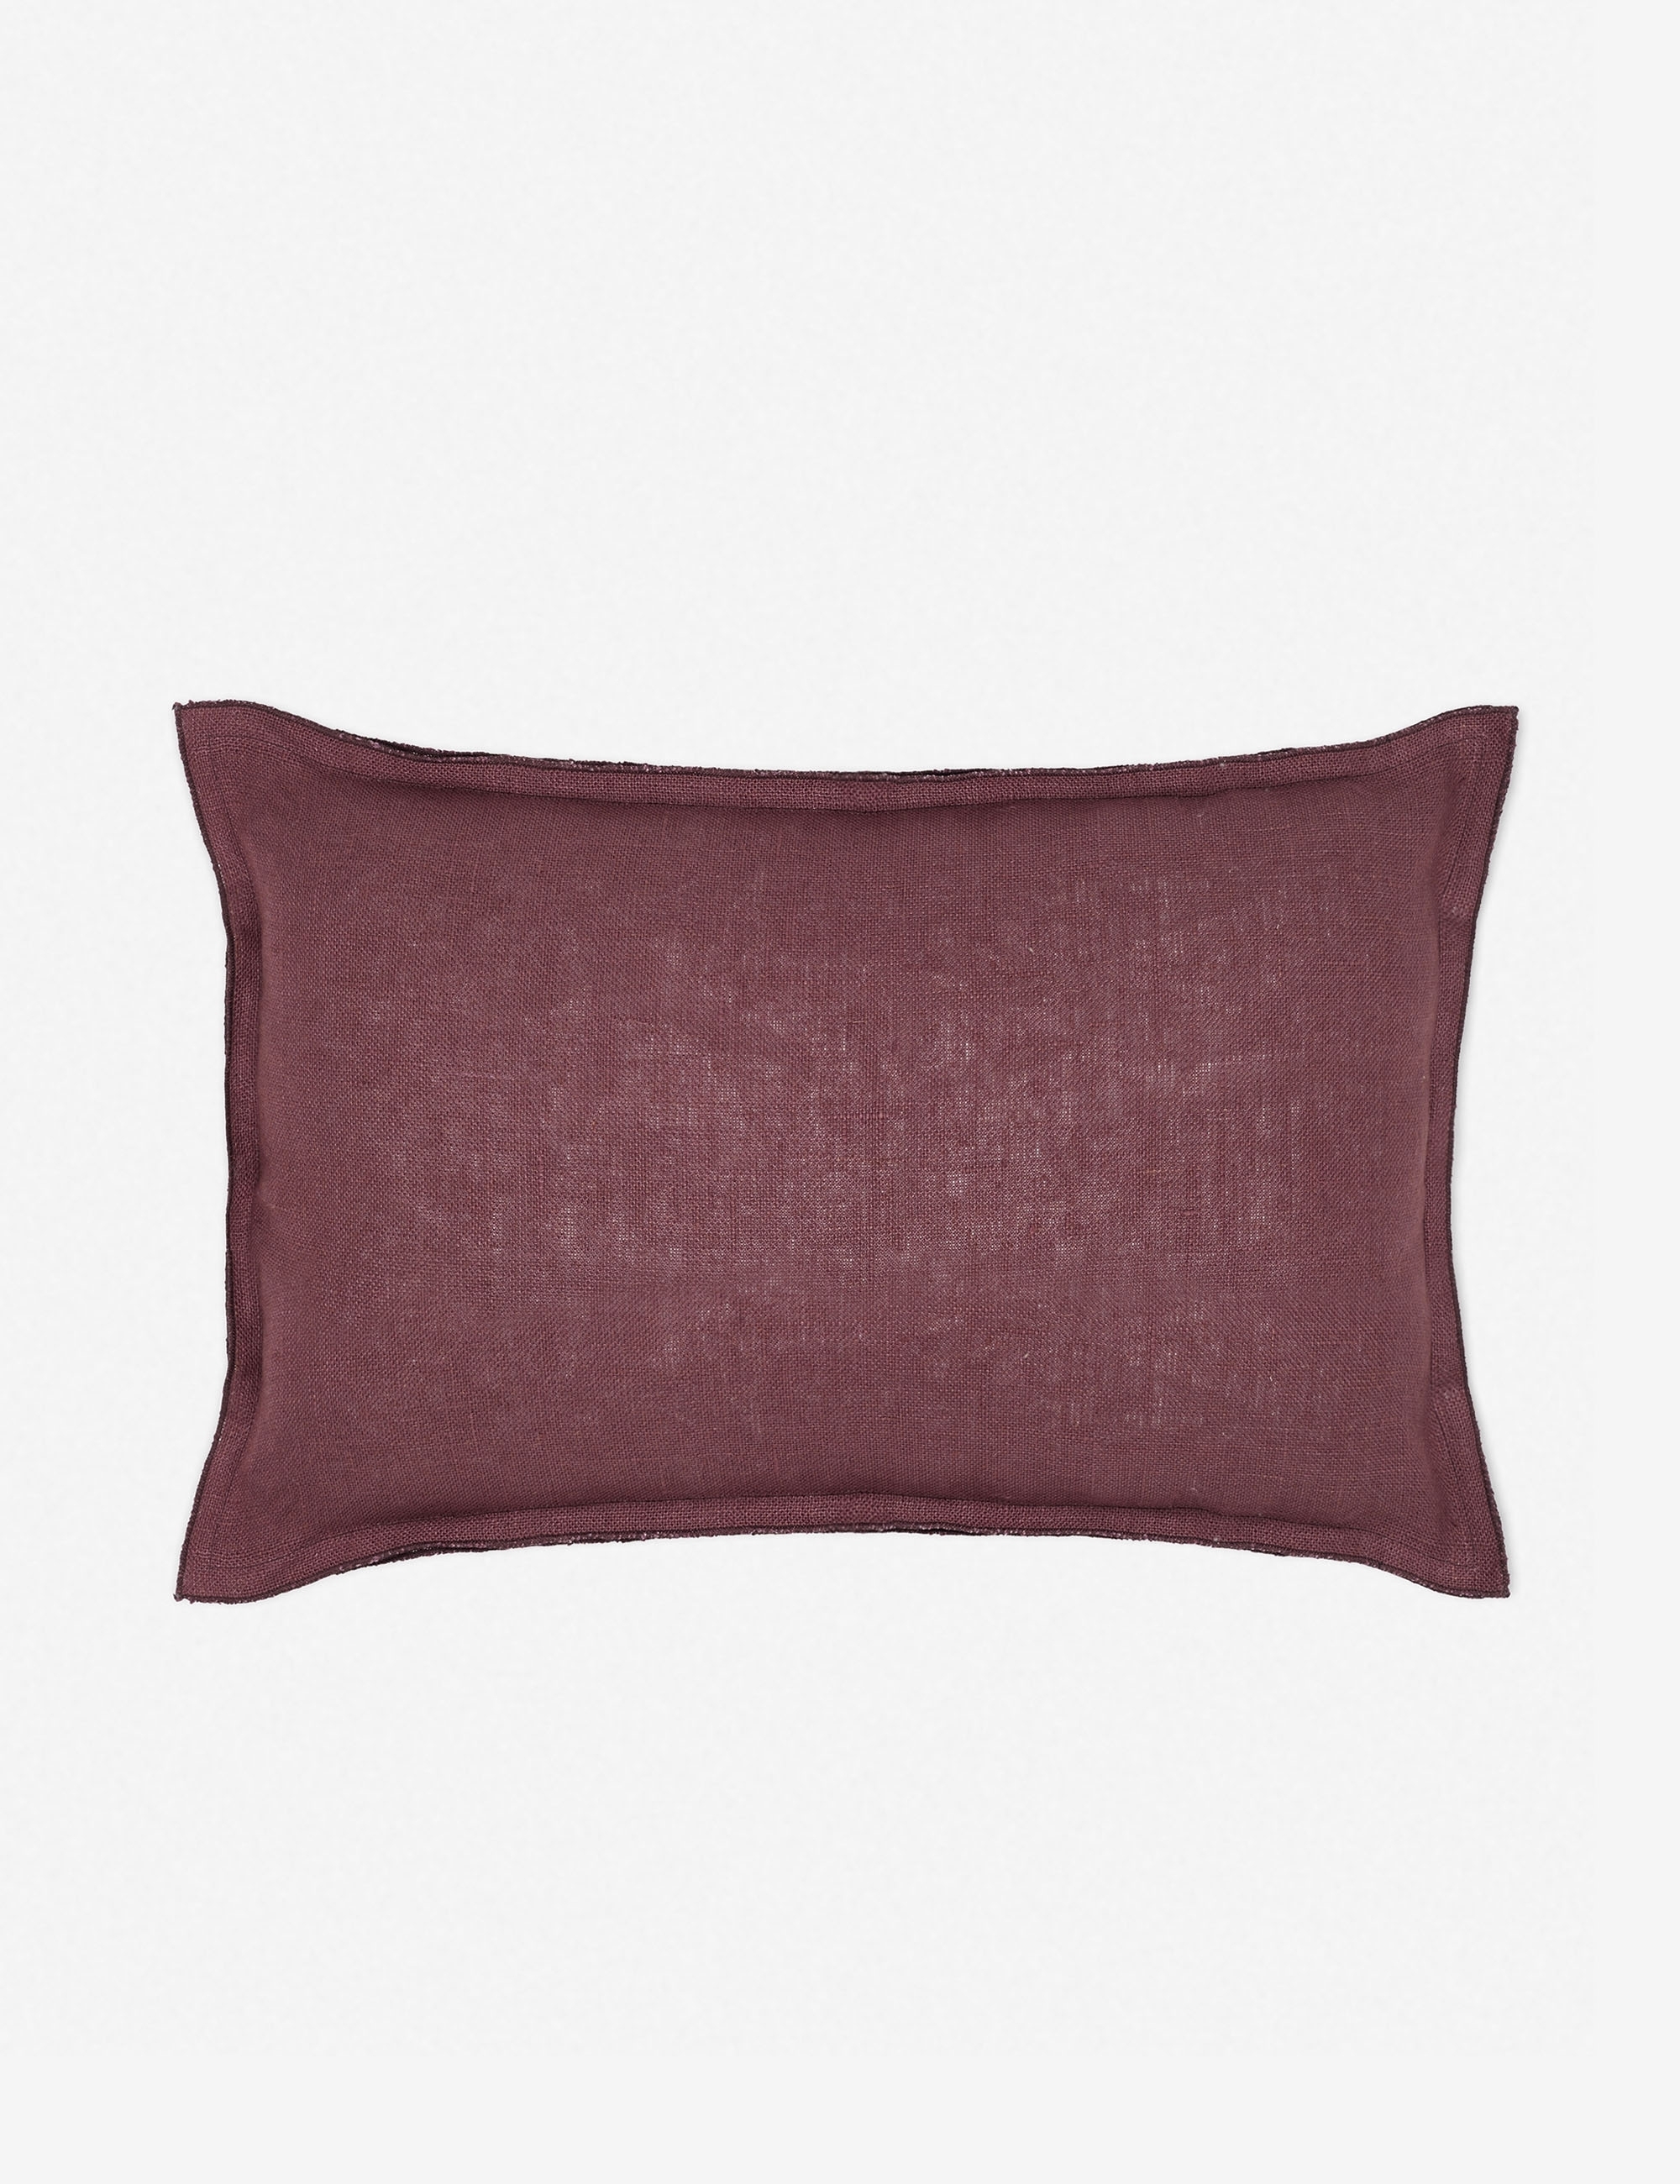 Arlo Linen Lumbar Pillow, Aubergine - Image 0